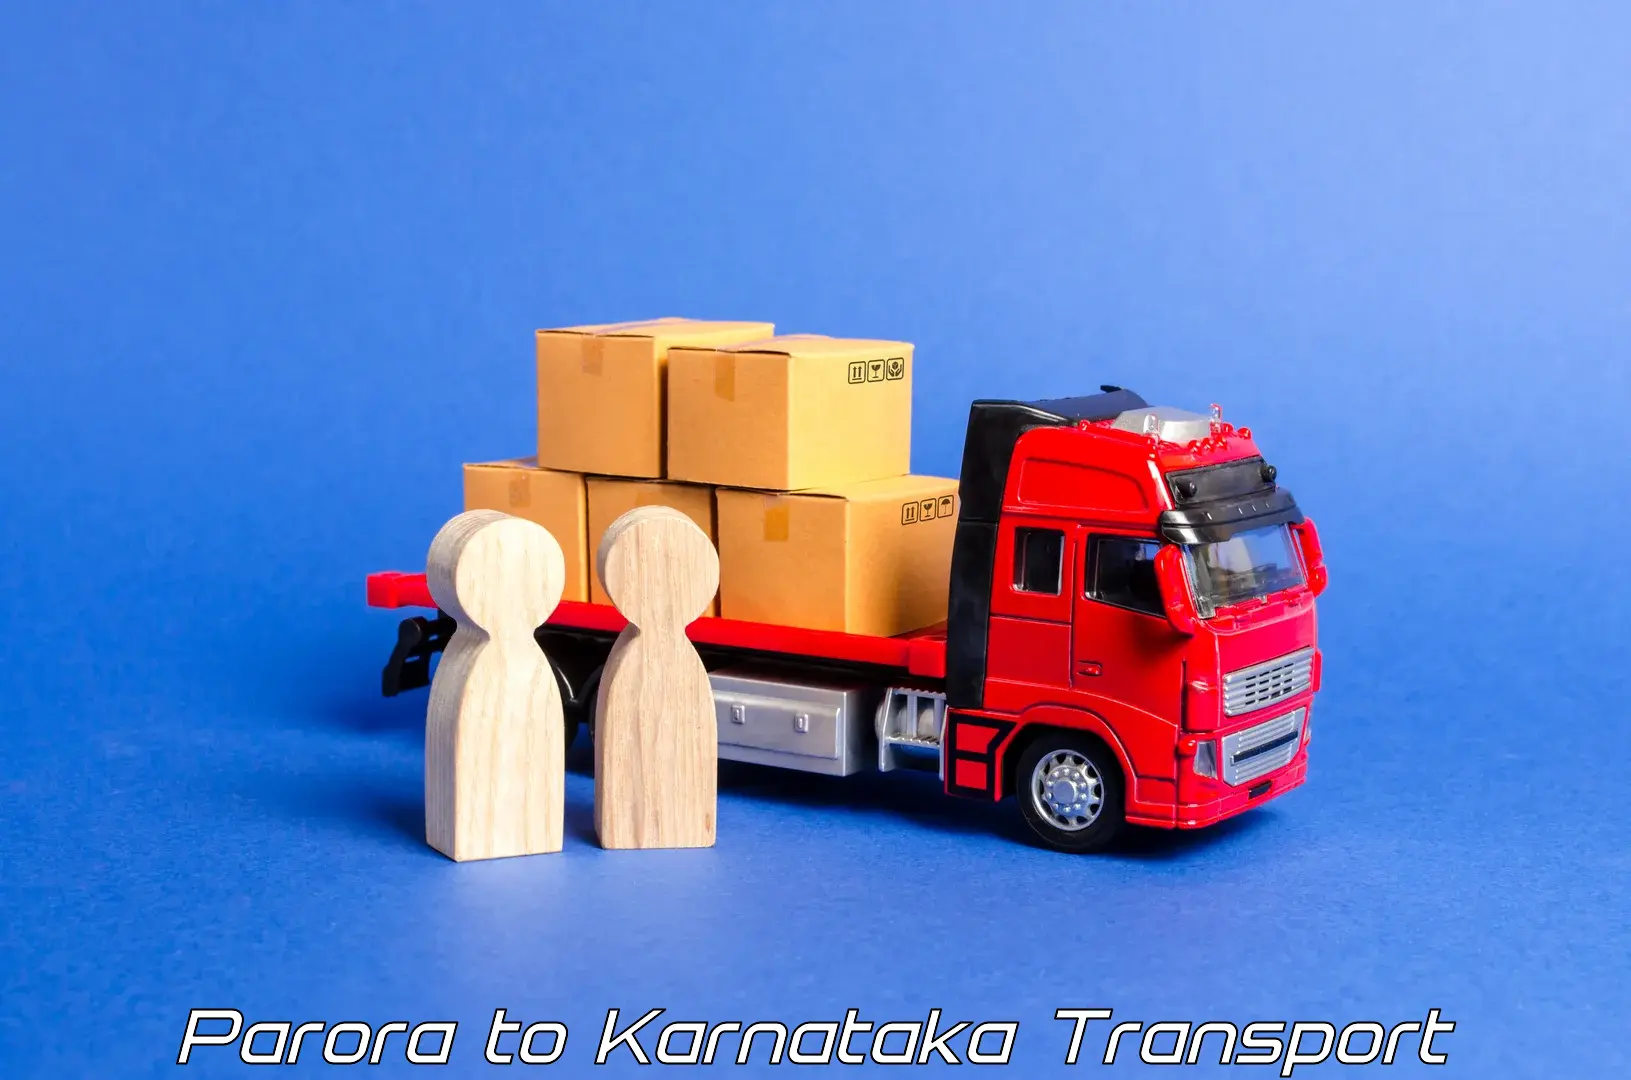 Transport in sharing Parora to Kodagu